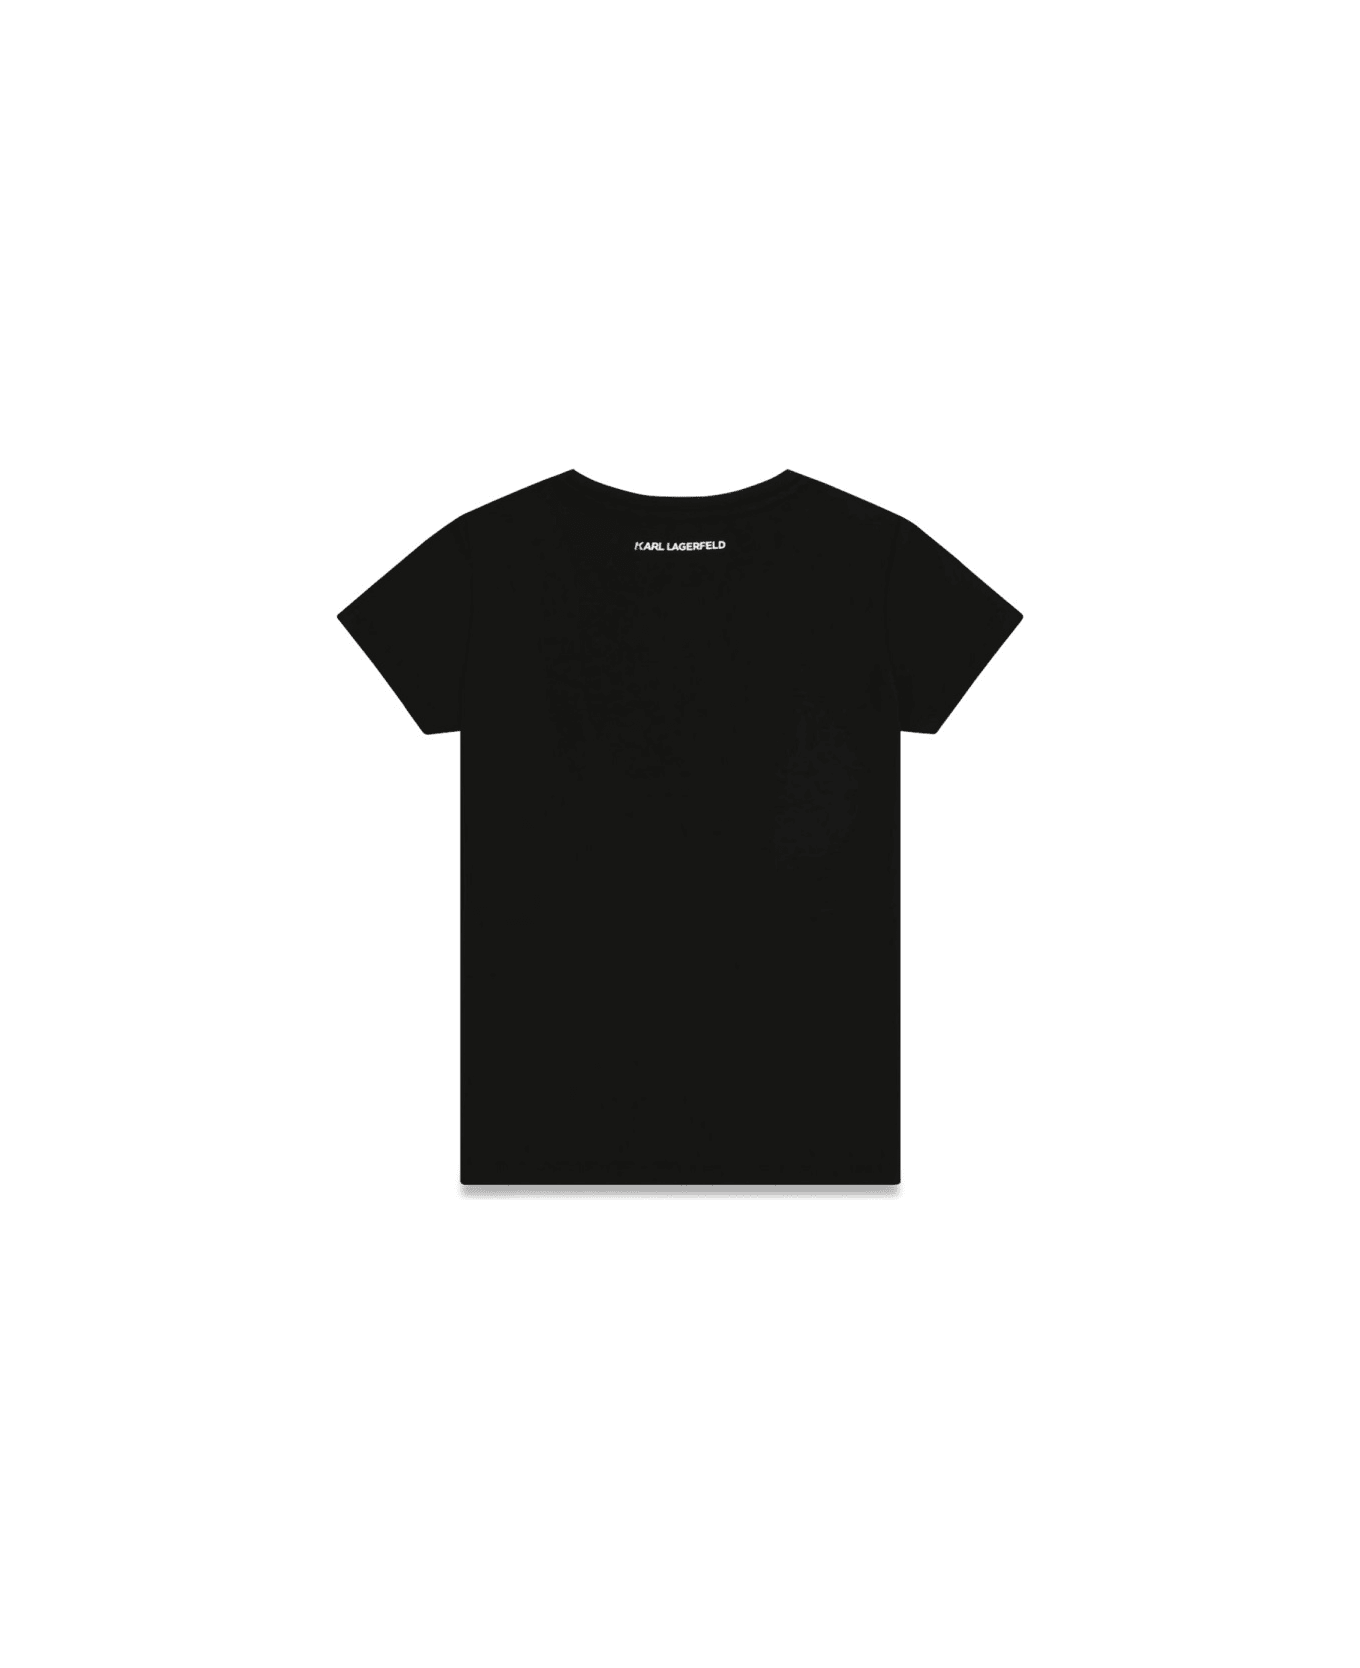 Karl Lagerfeld Tee Shirt - BLACK